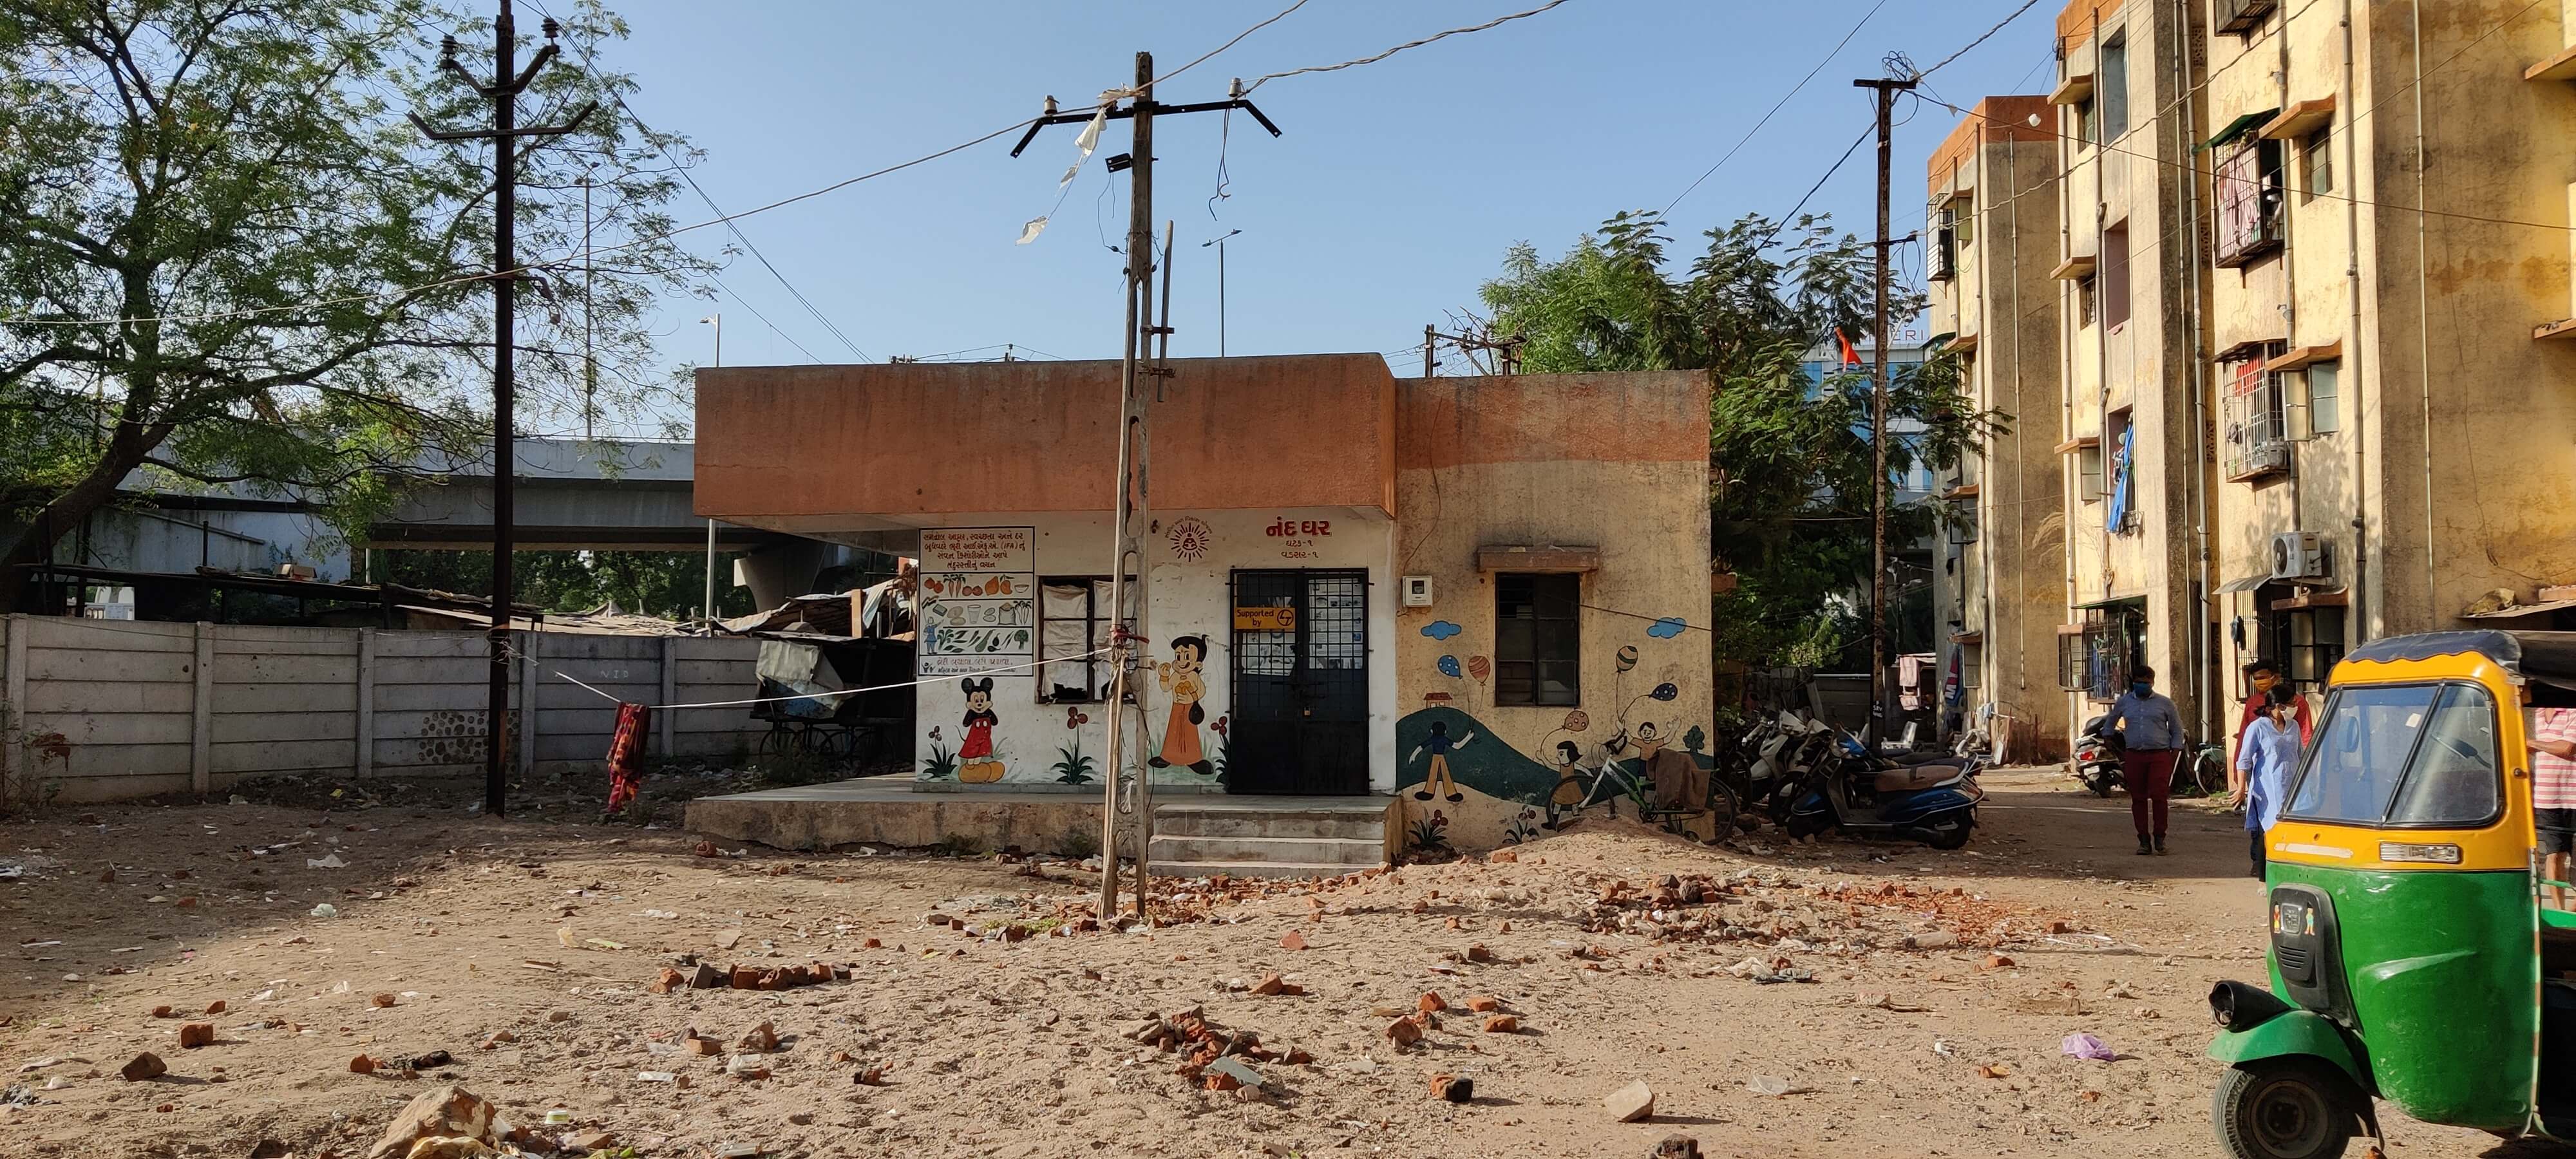 Anganwadi premises in low income housing